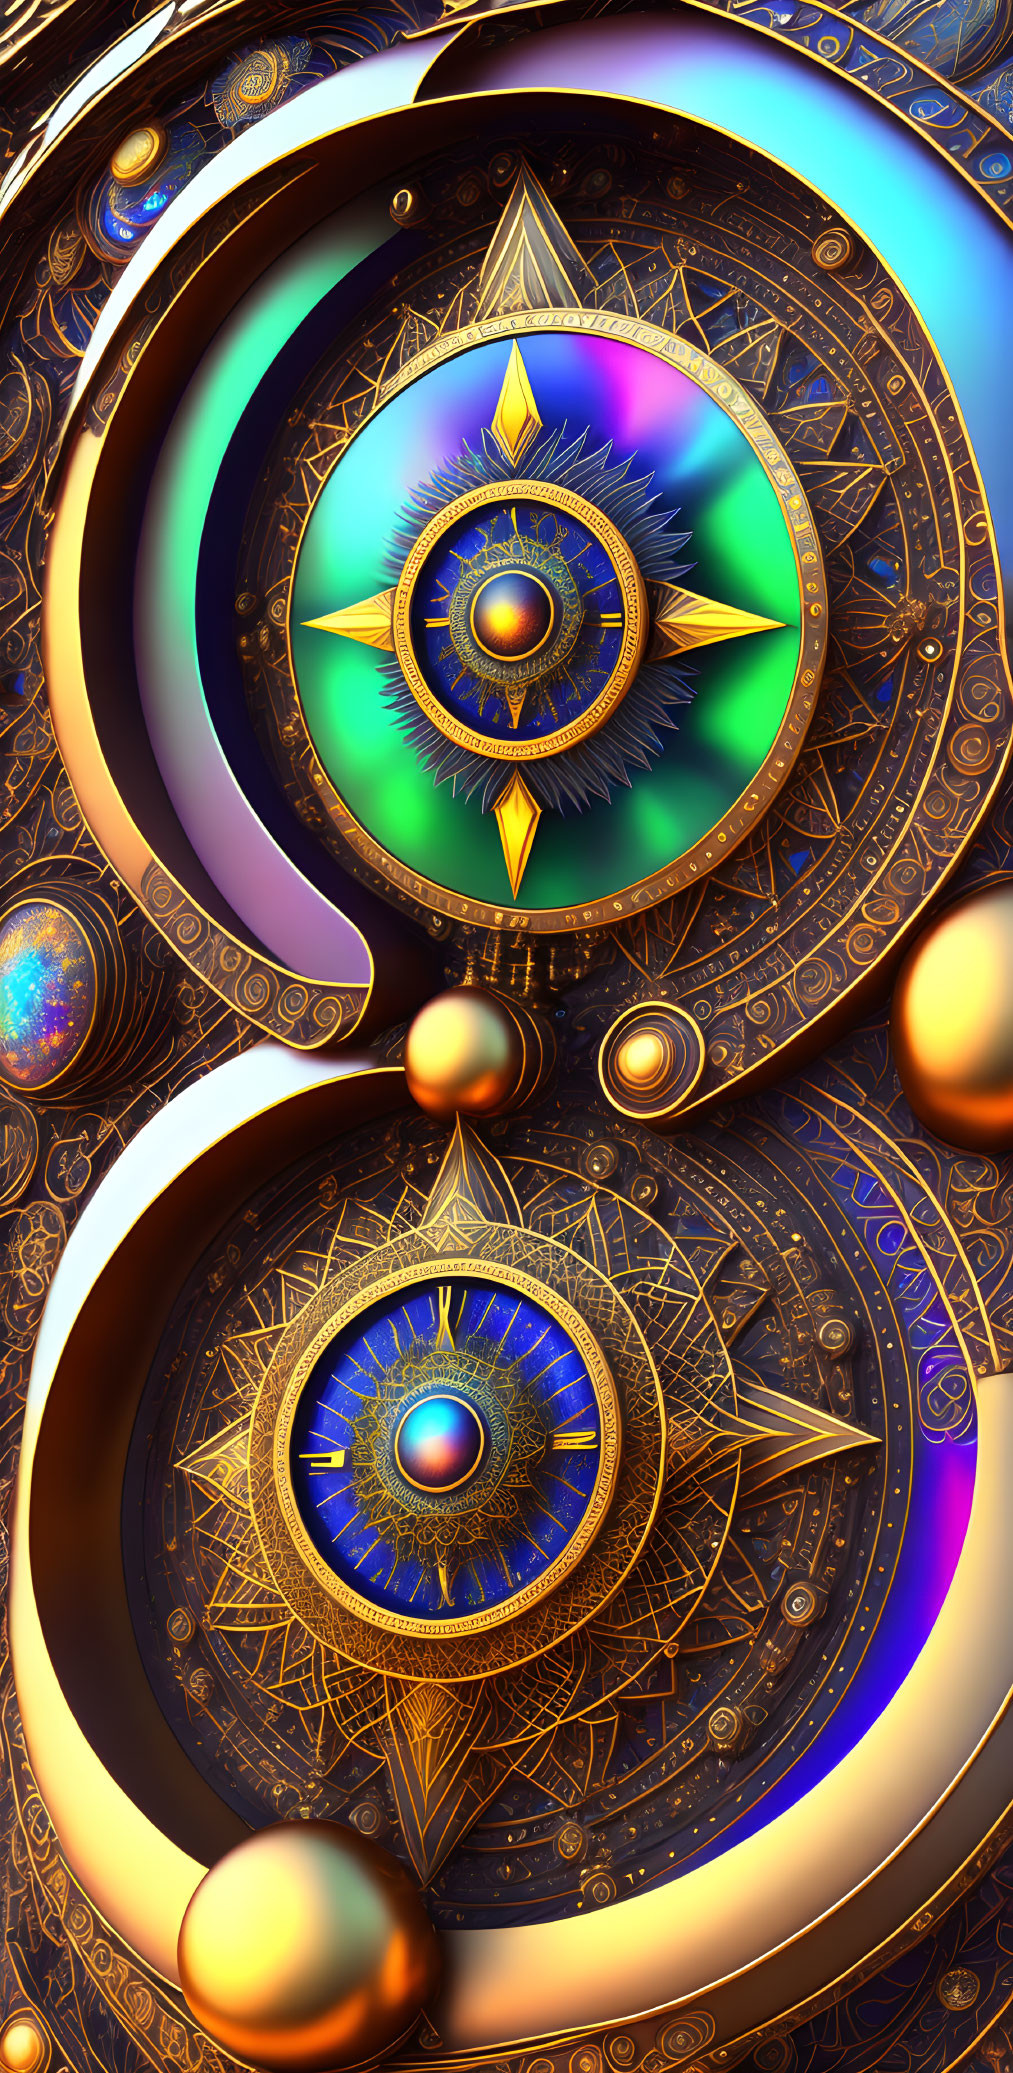 Detailed digital art: ornate eyes, geometric patterns, cosmic vibe